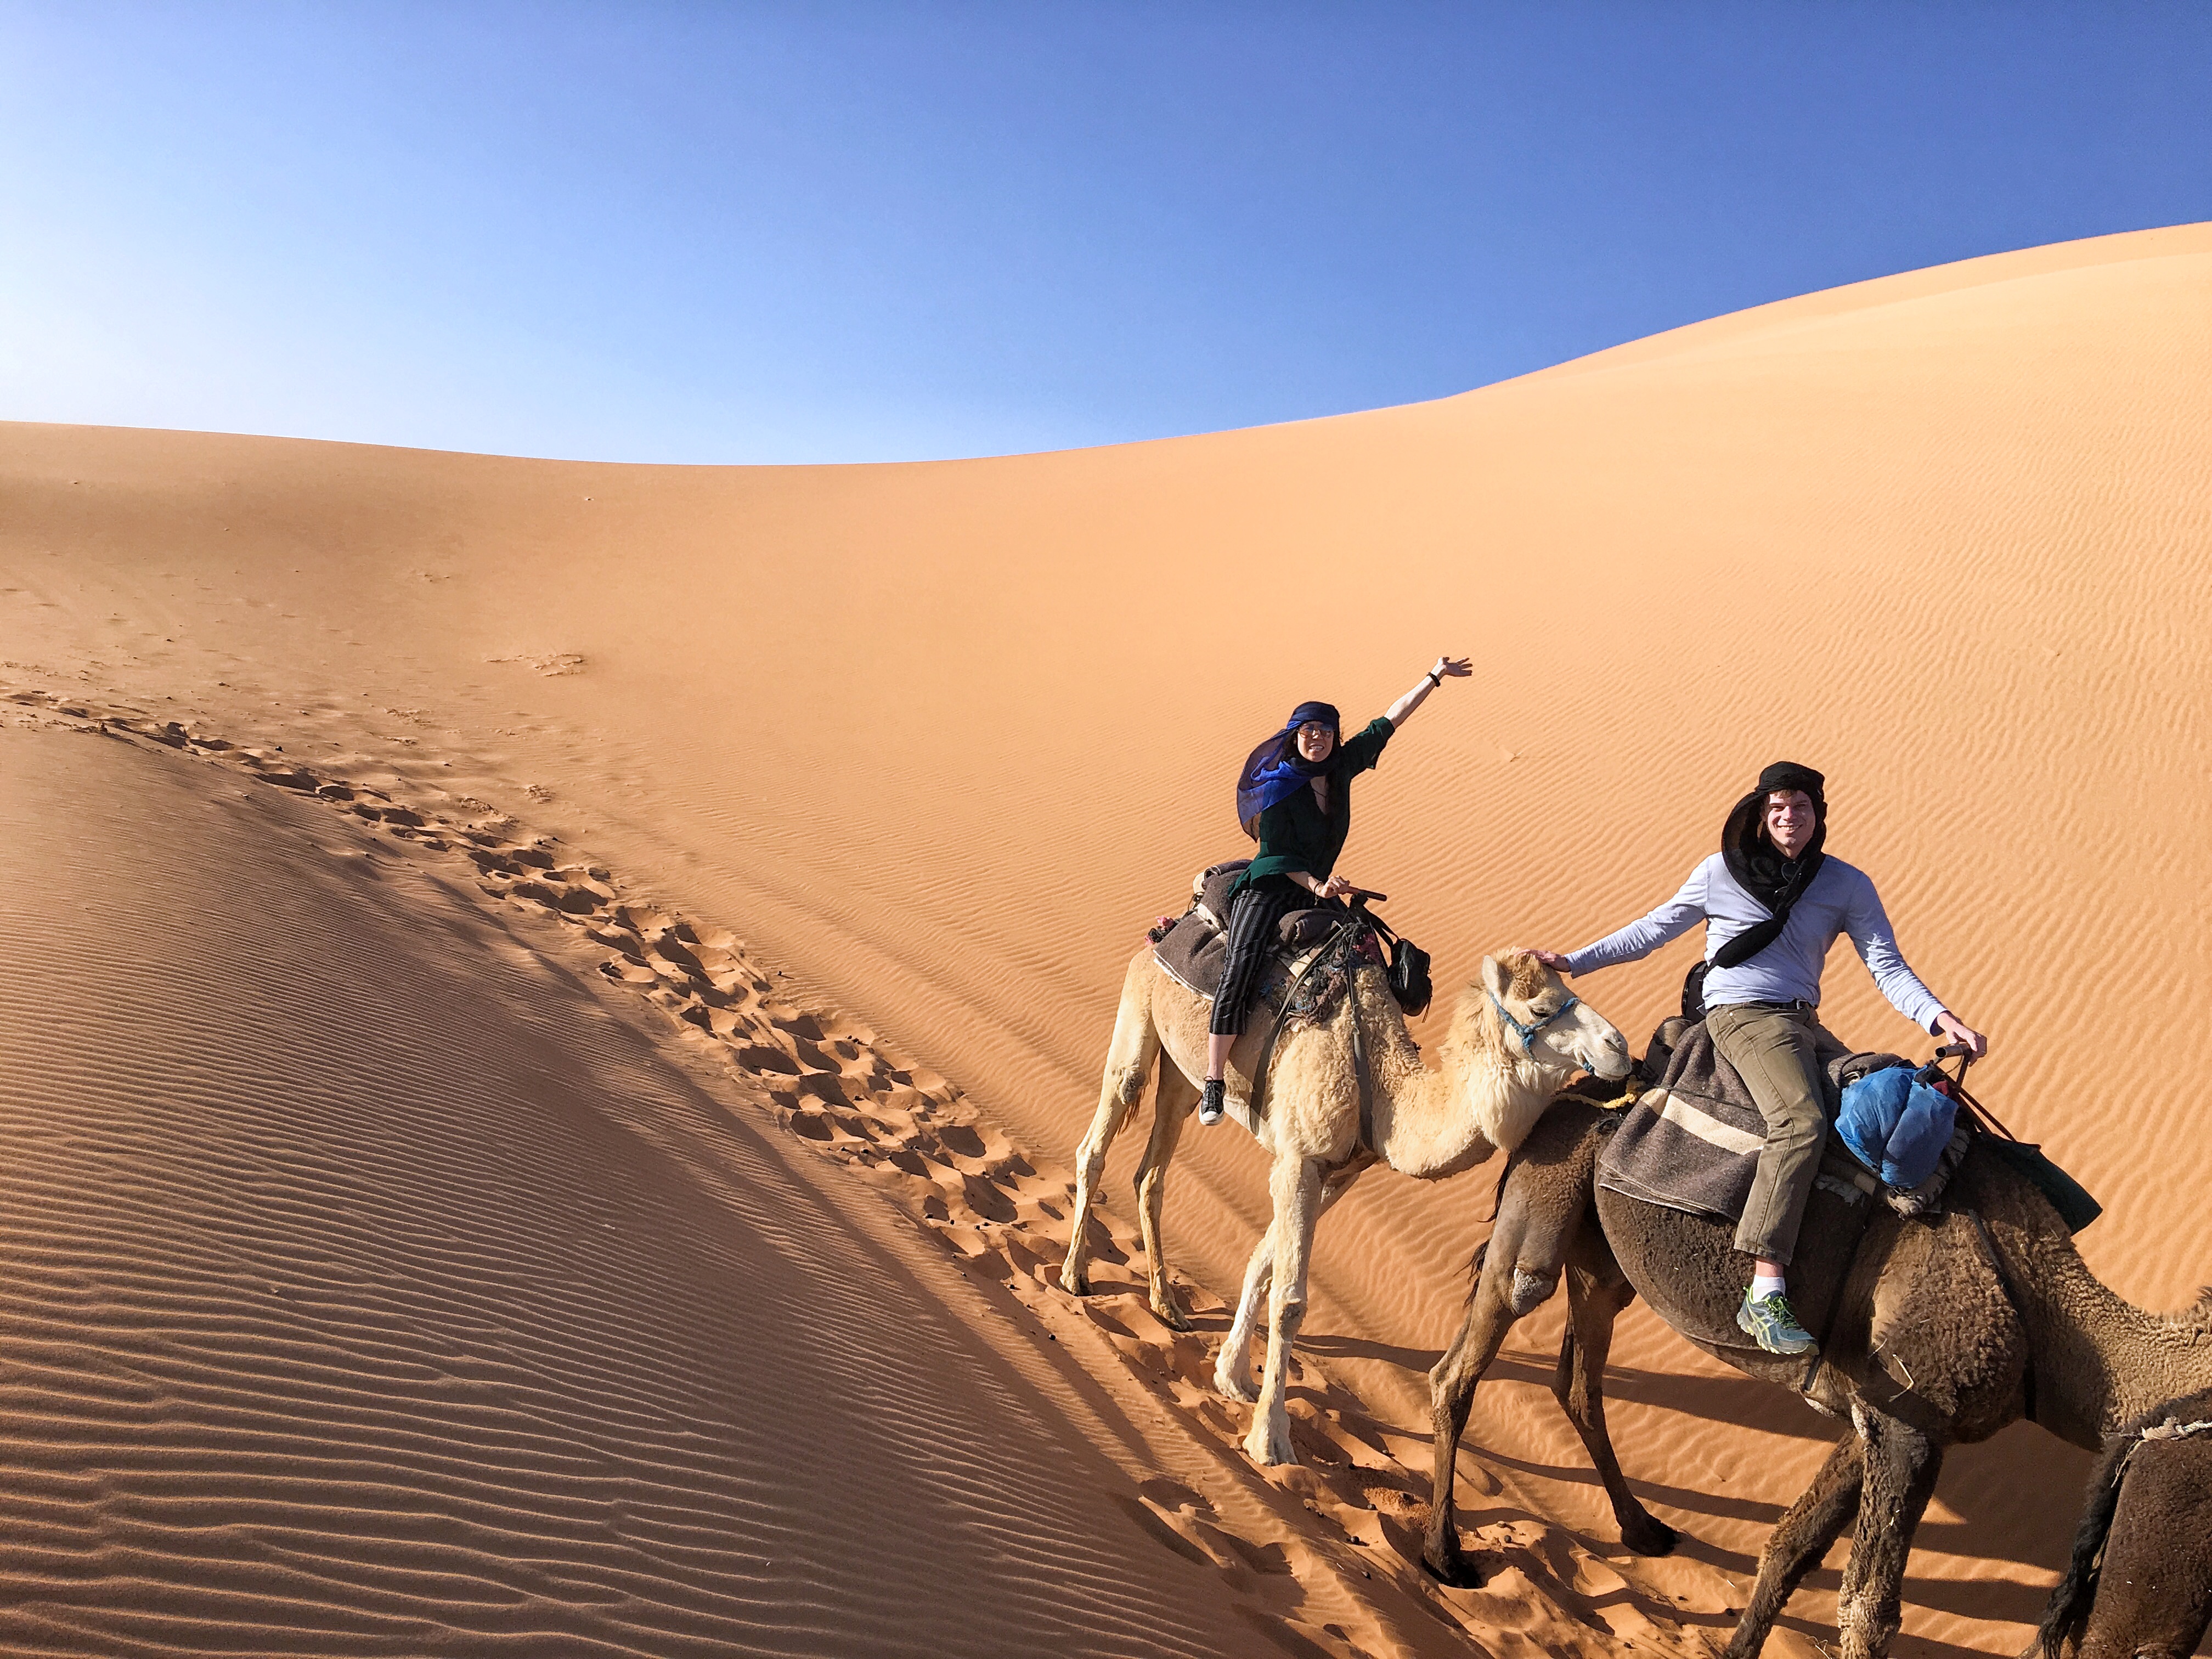 Kevin and I camel riding in Sahara